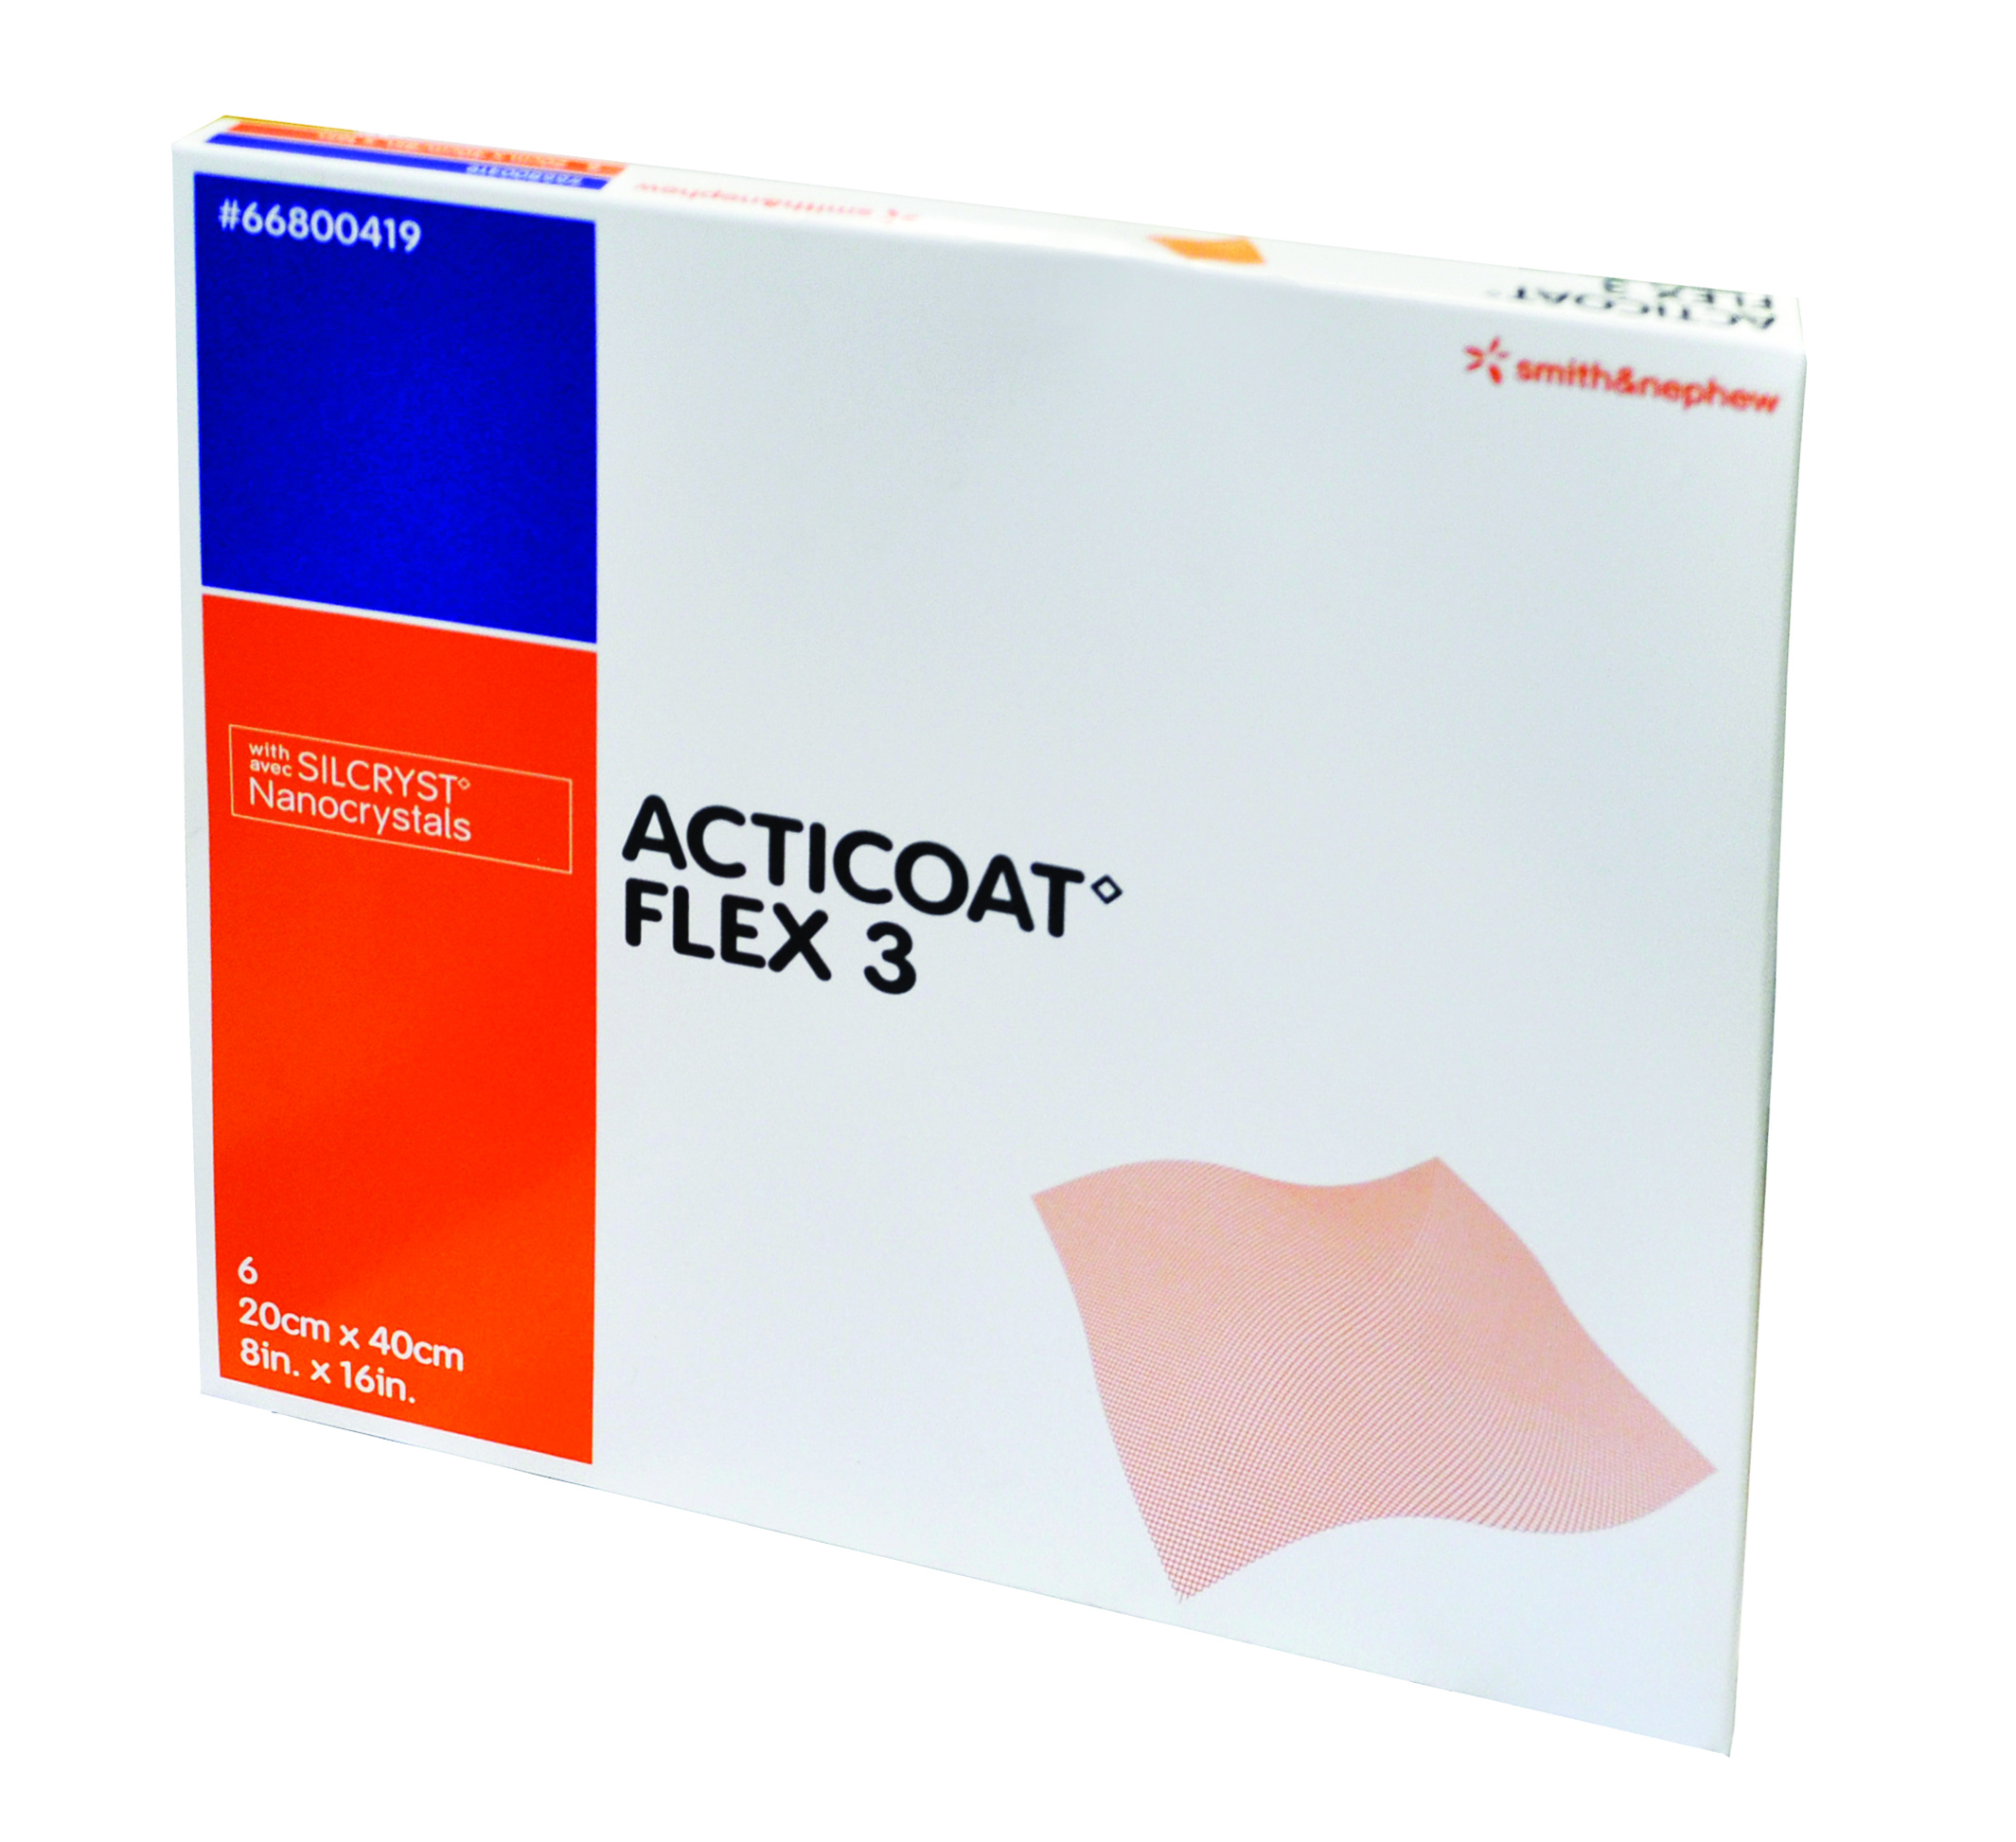 Acticoat Flex 3 Antimicrobial Dressing 20cm x 40cm image 1